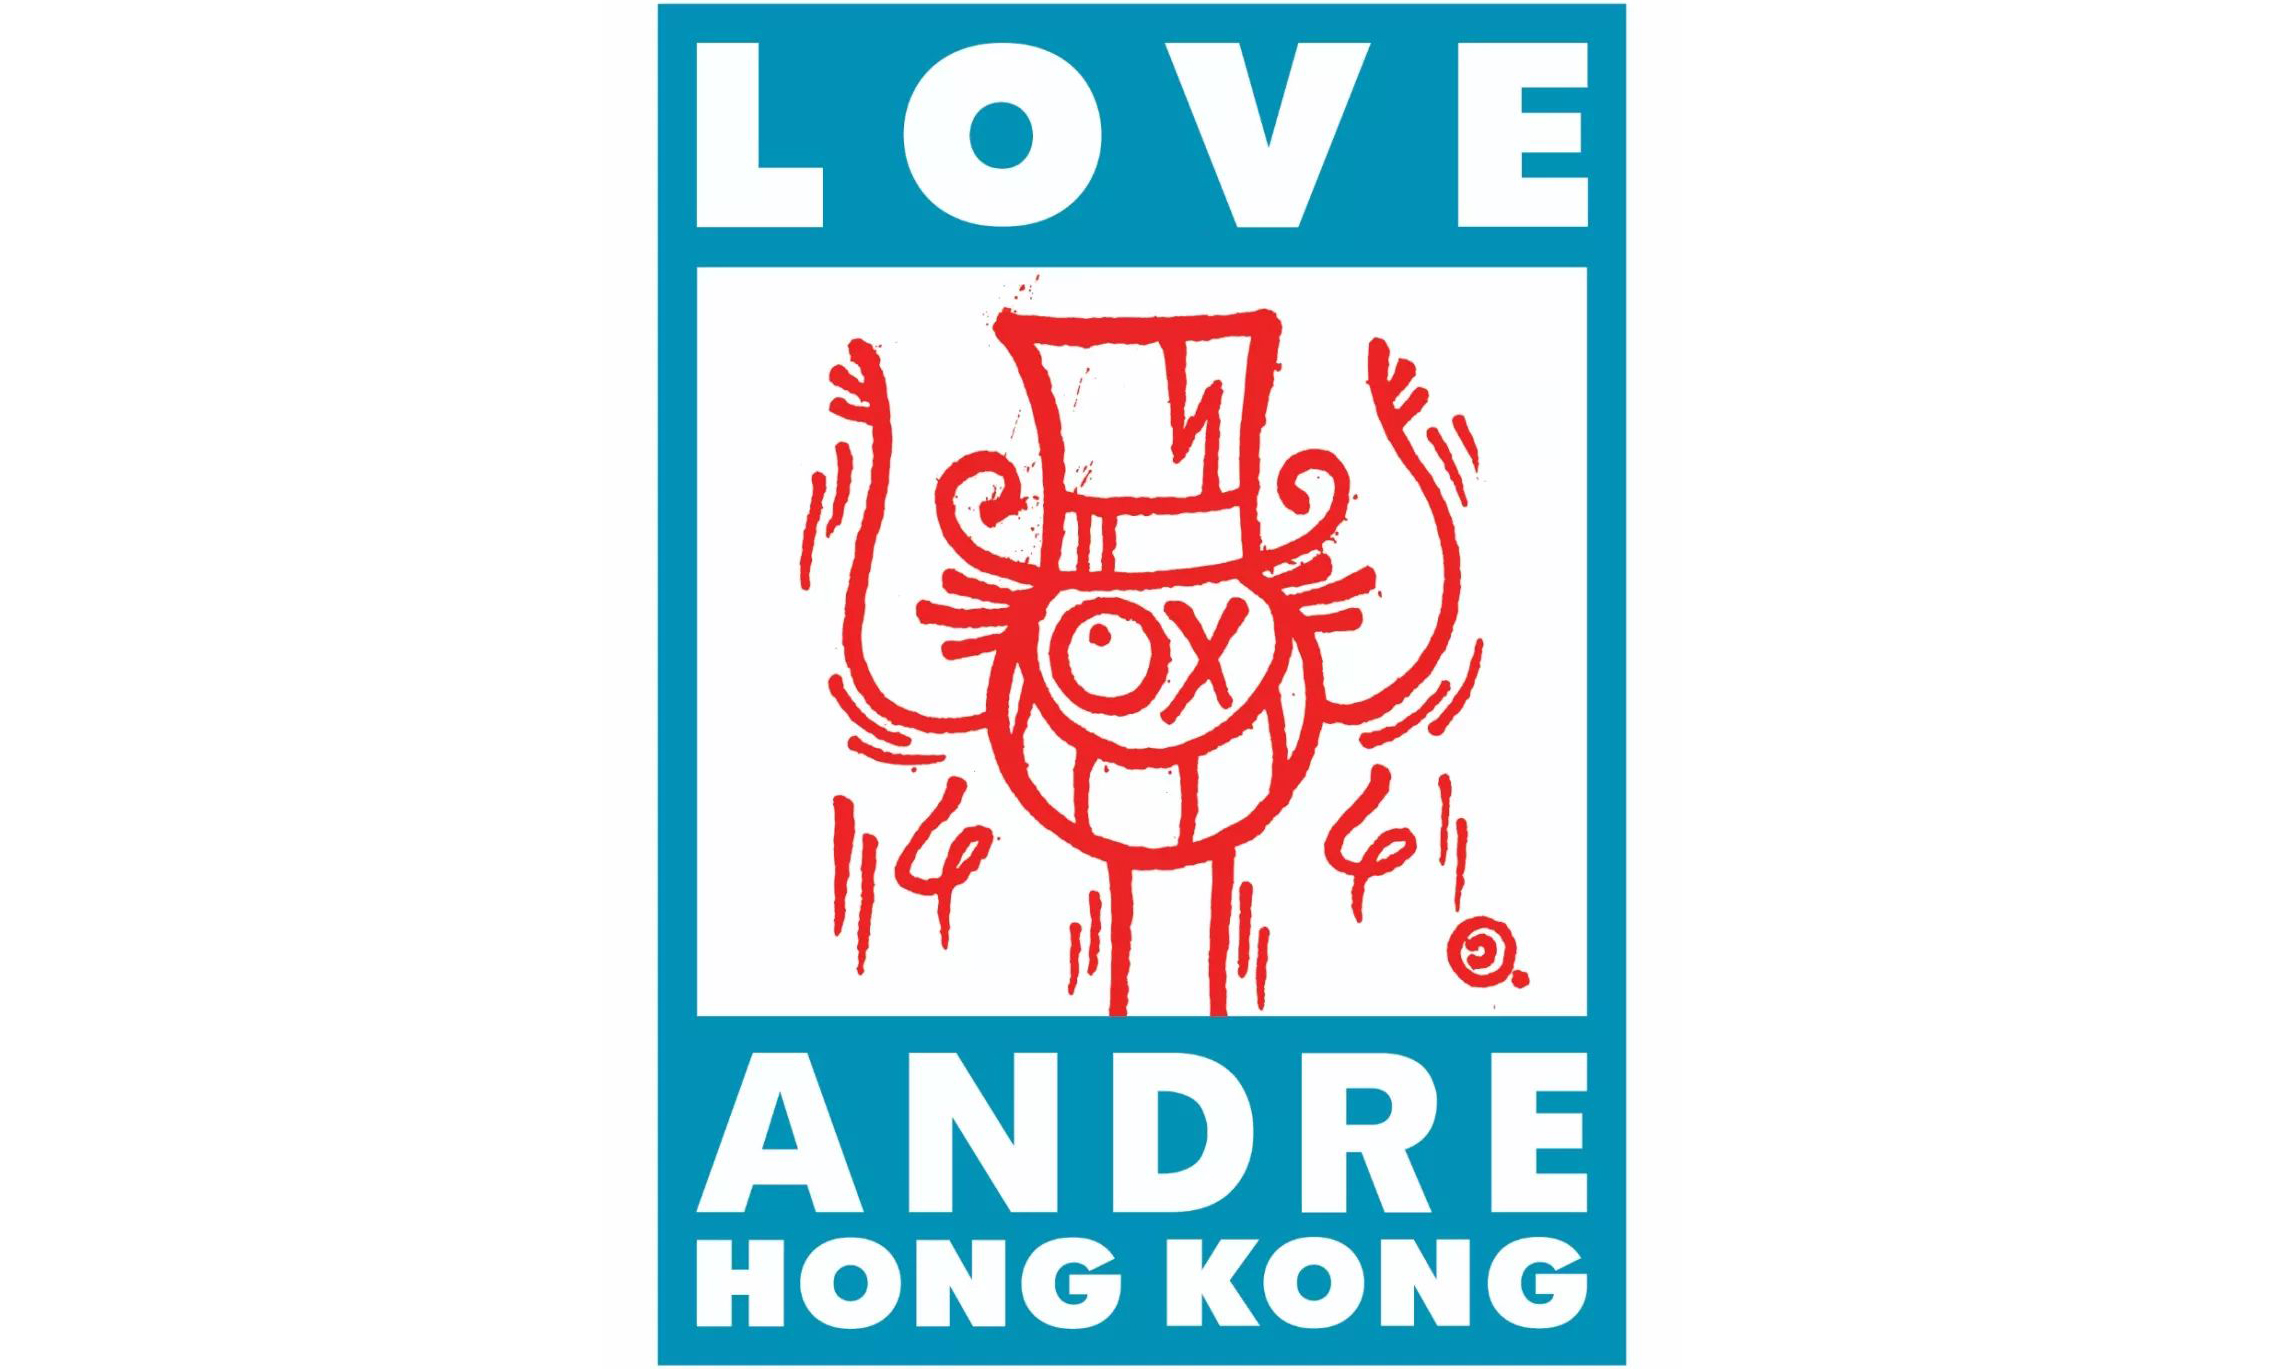 André Saraiva 将于香港巴塞尔艺术周期间举办个展